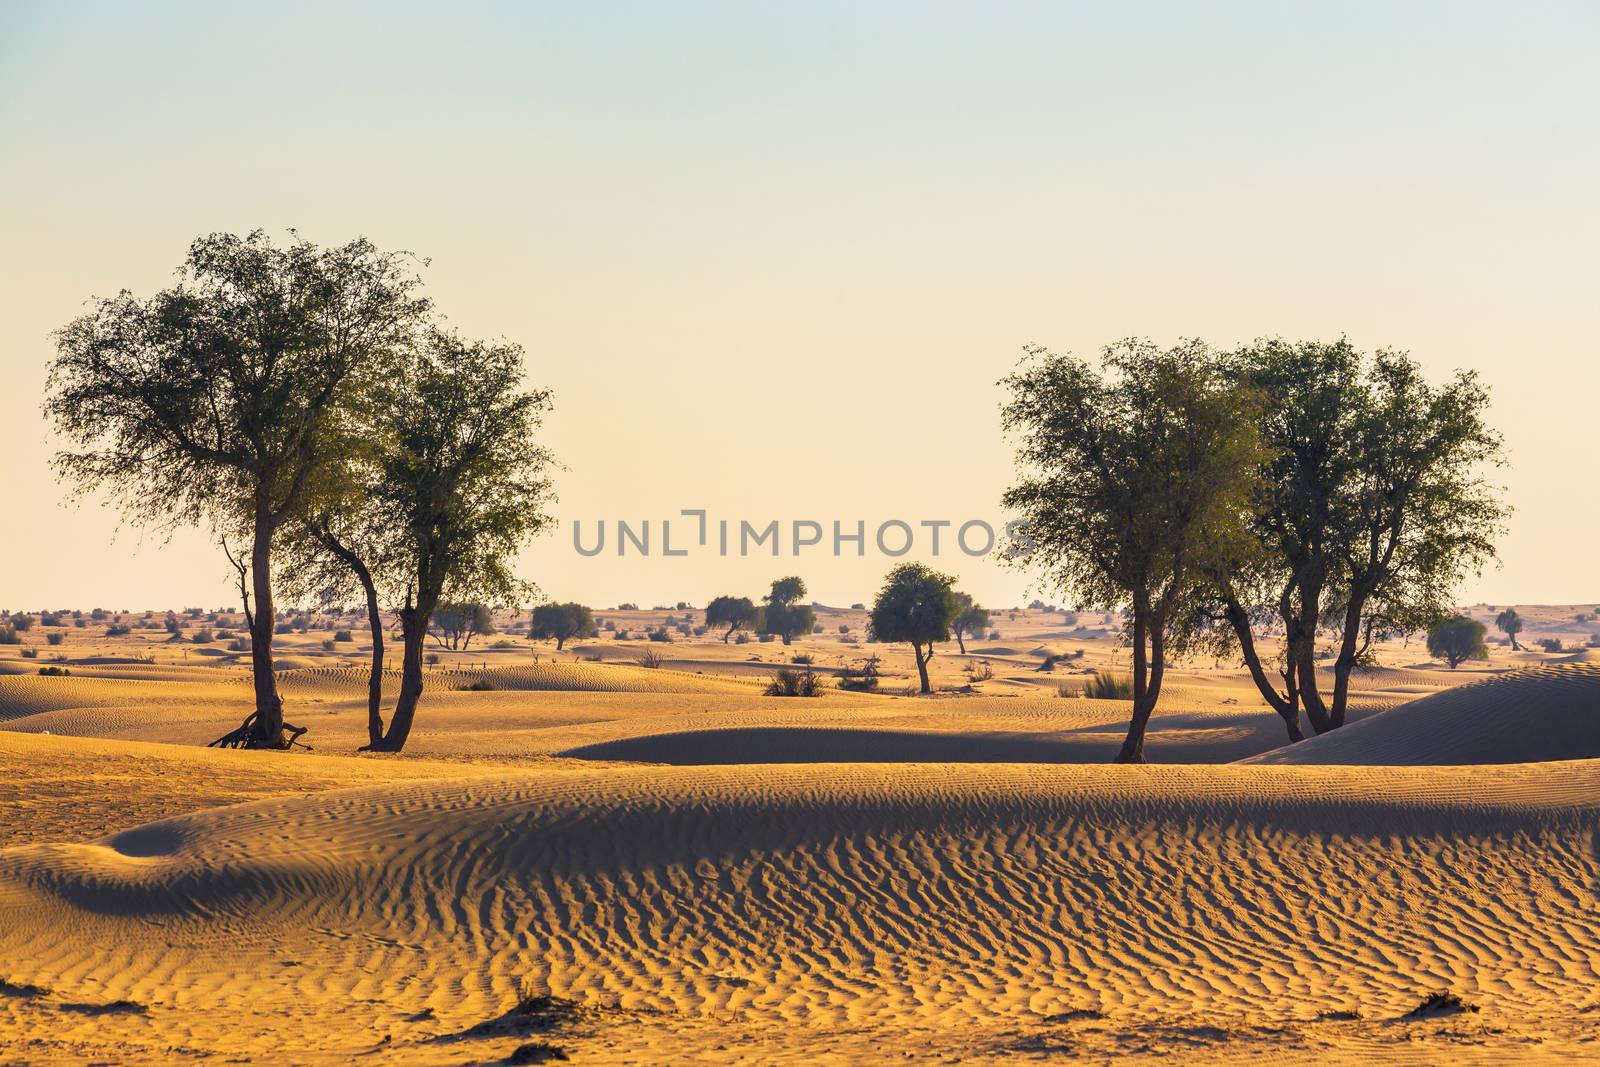  Arabian desert by oleg_zhukov